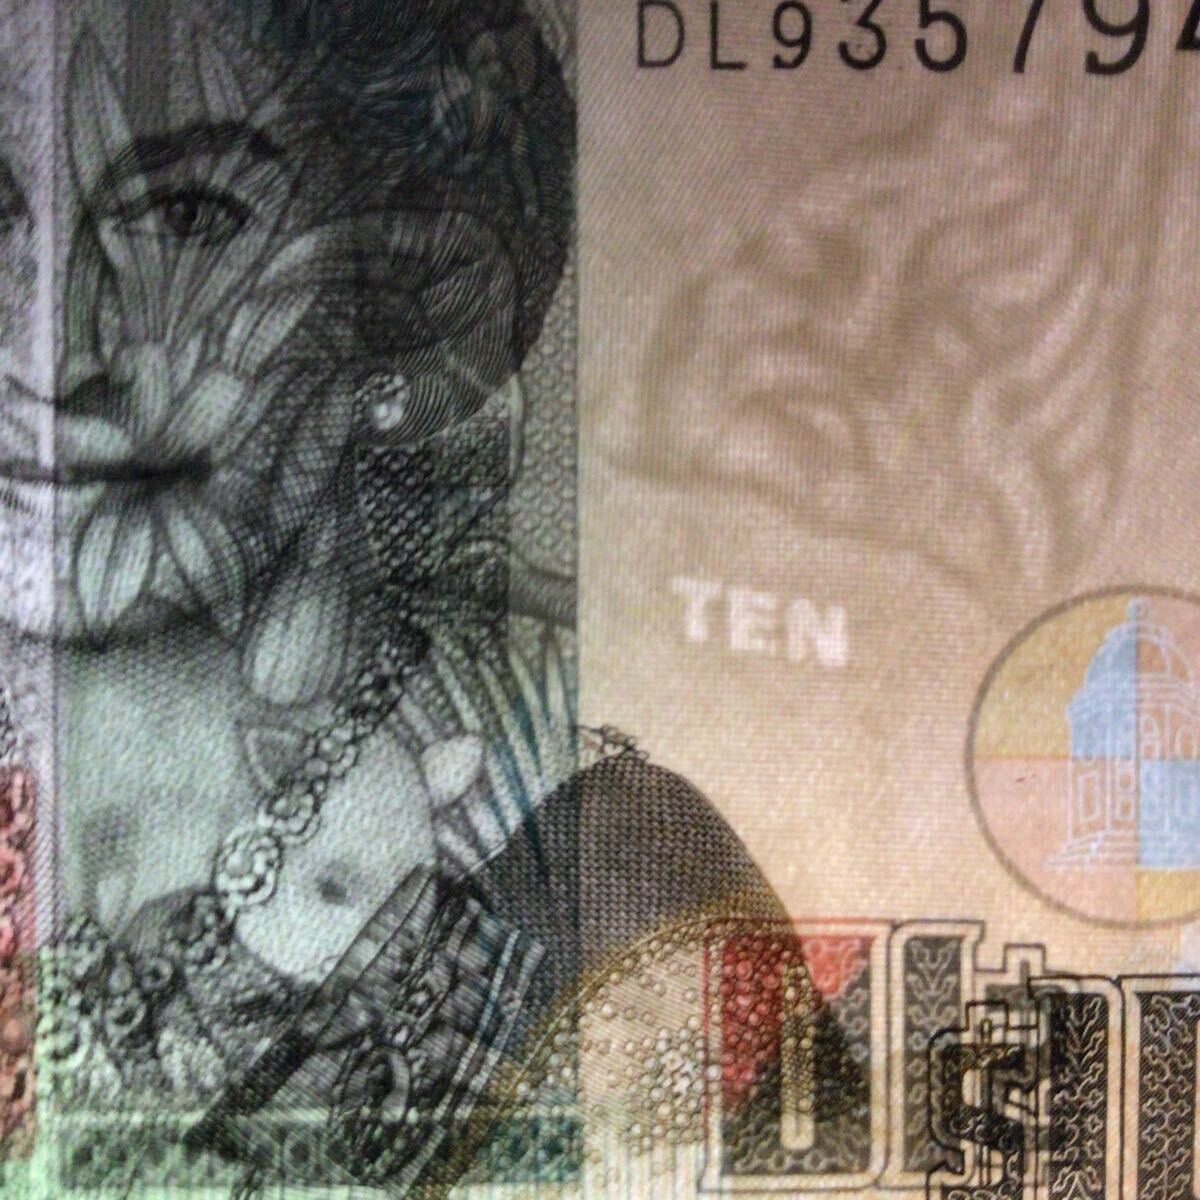 World Banknote Grading BELIZE《Central Bank》10 Dollars【2016】『PMG Grading Gem Uncirculated 66 EPQ』_画像3